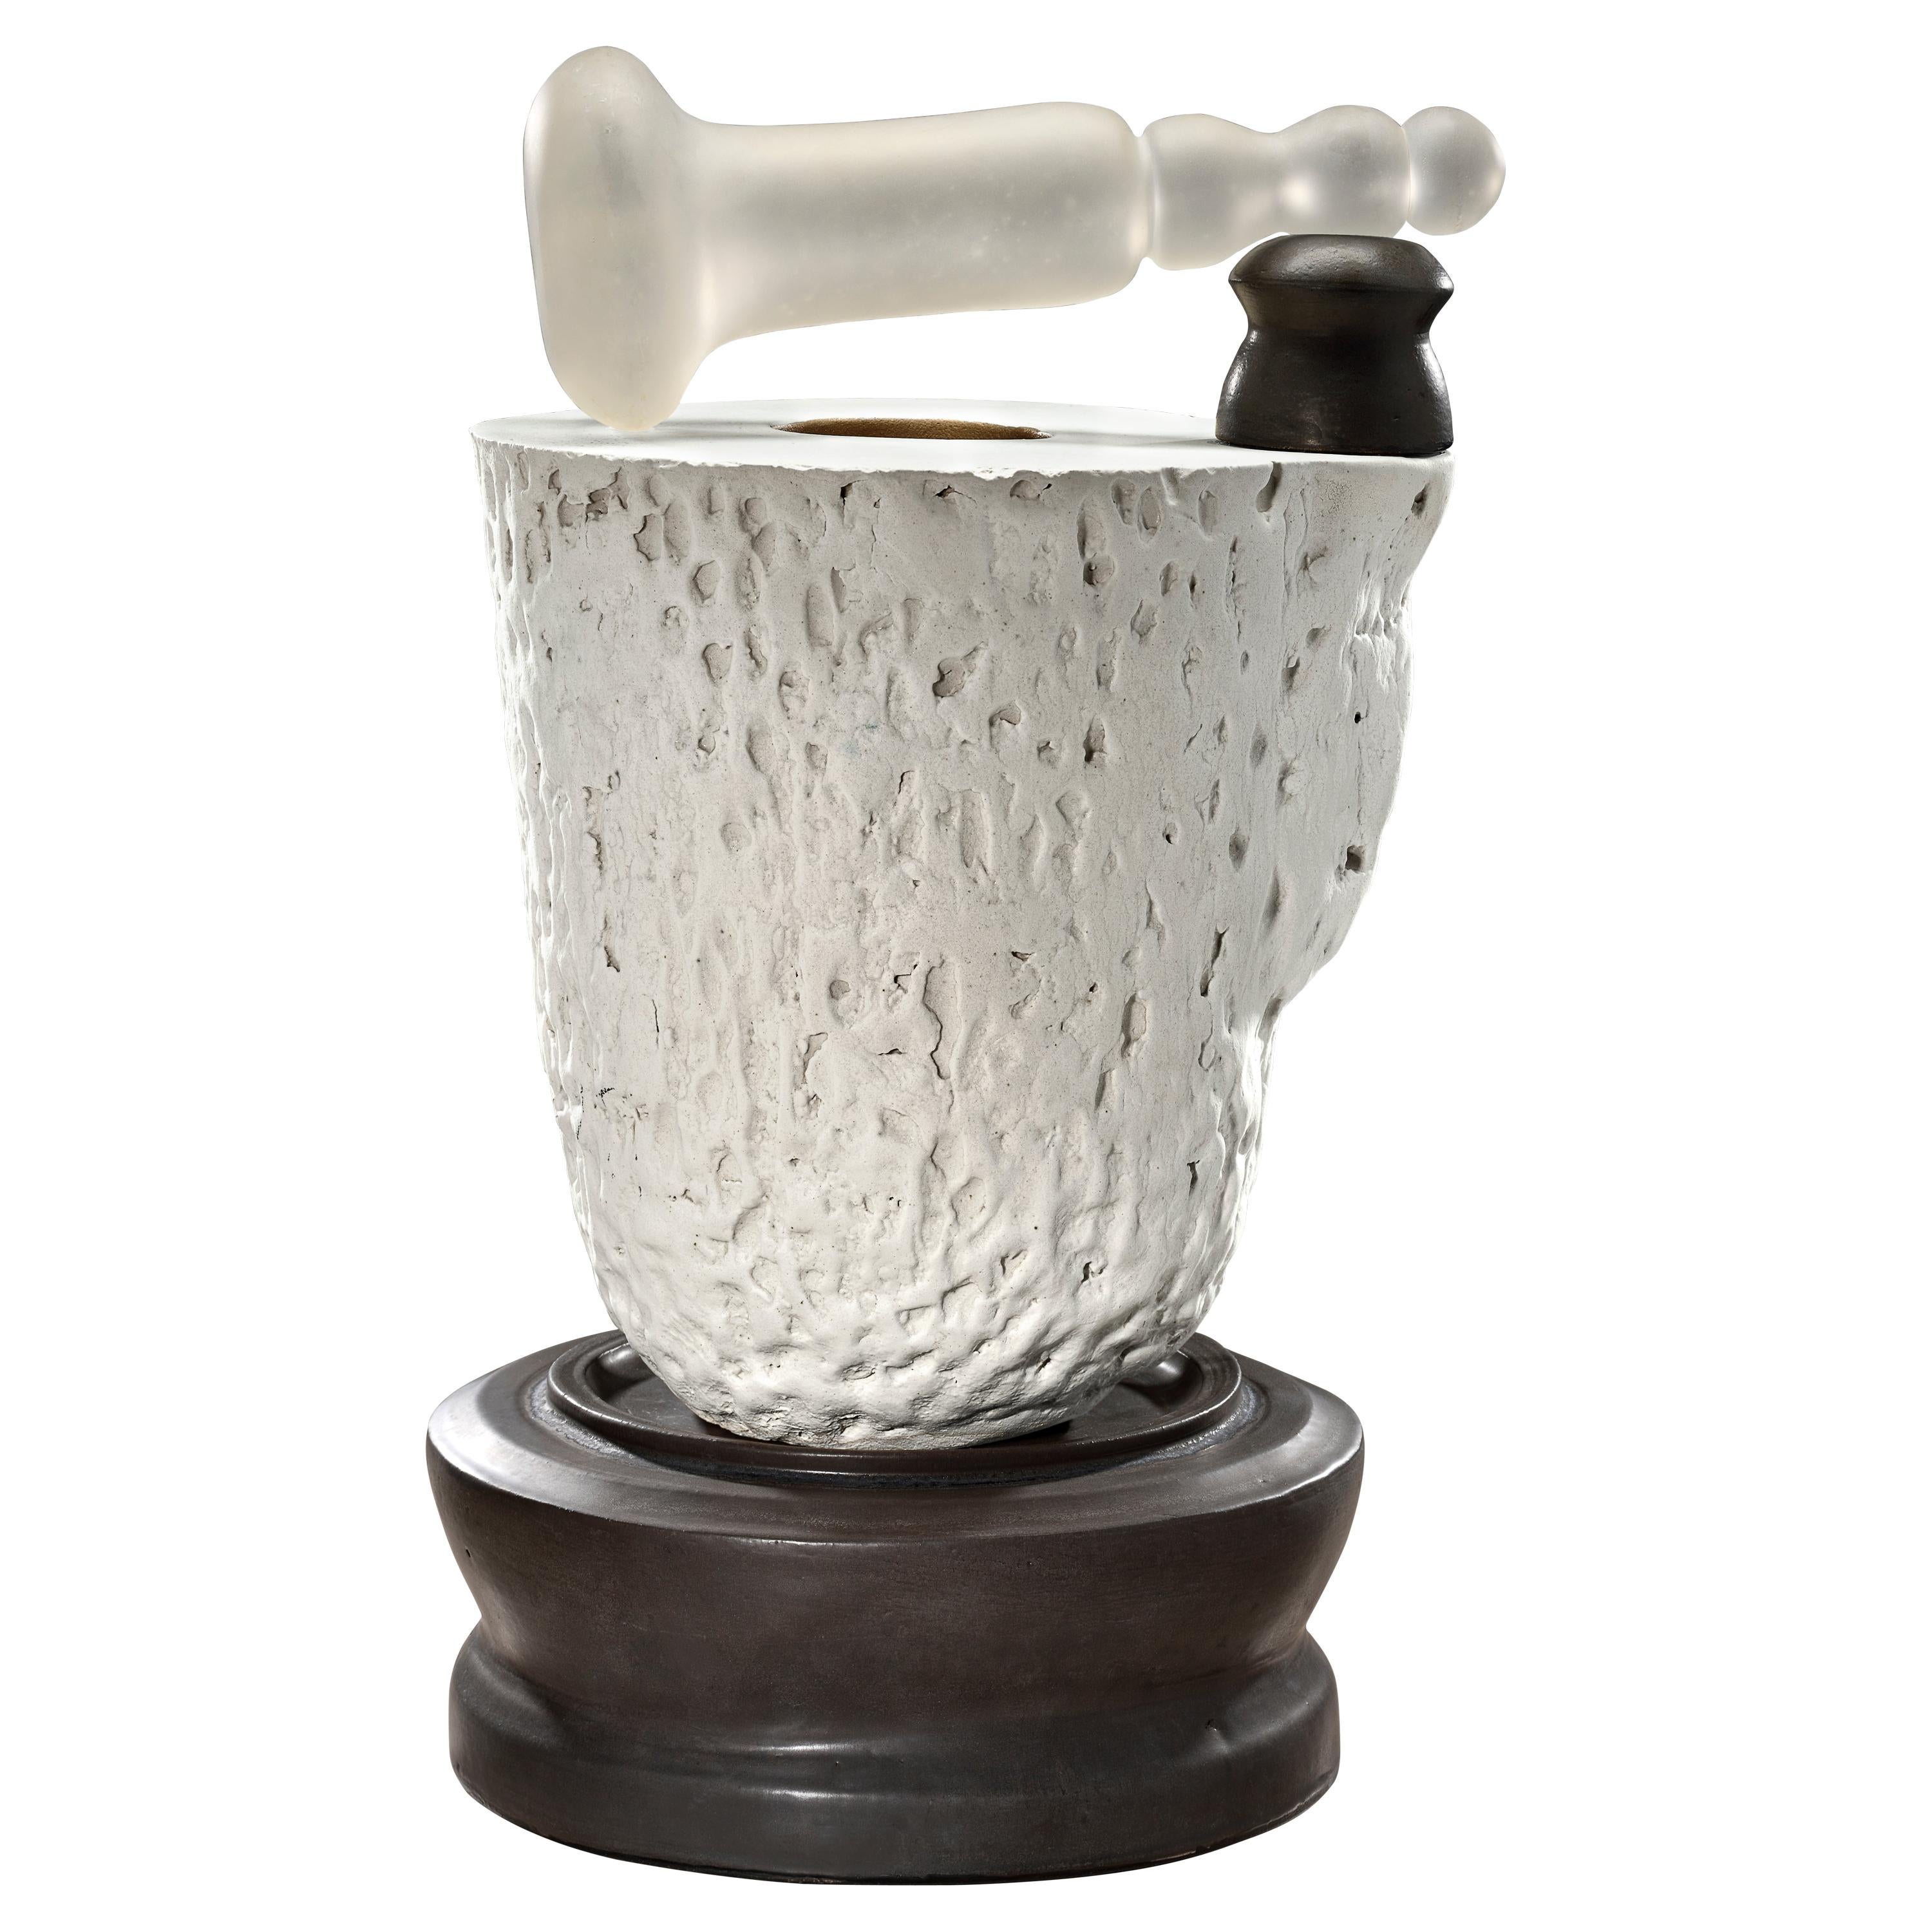 Richard Hirsch Ceramic Mortar and Glass Pestle Sculpture #4, 2020 For Sale